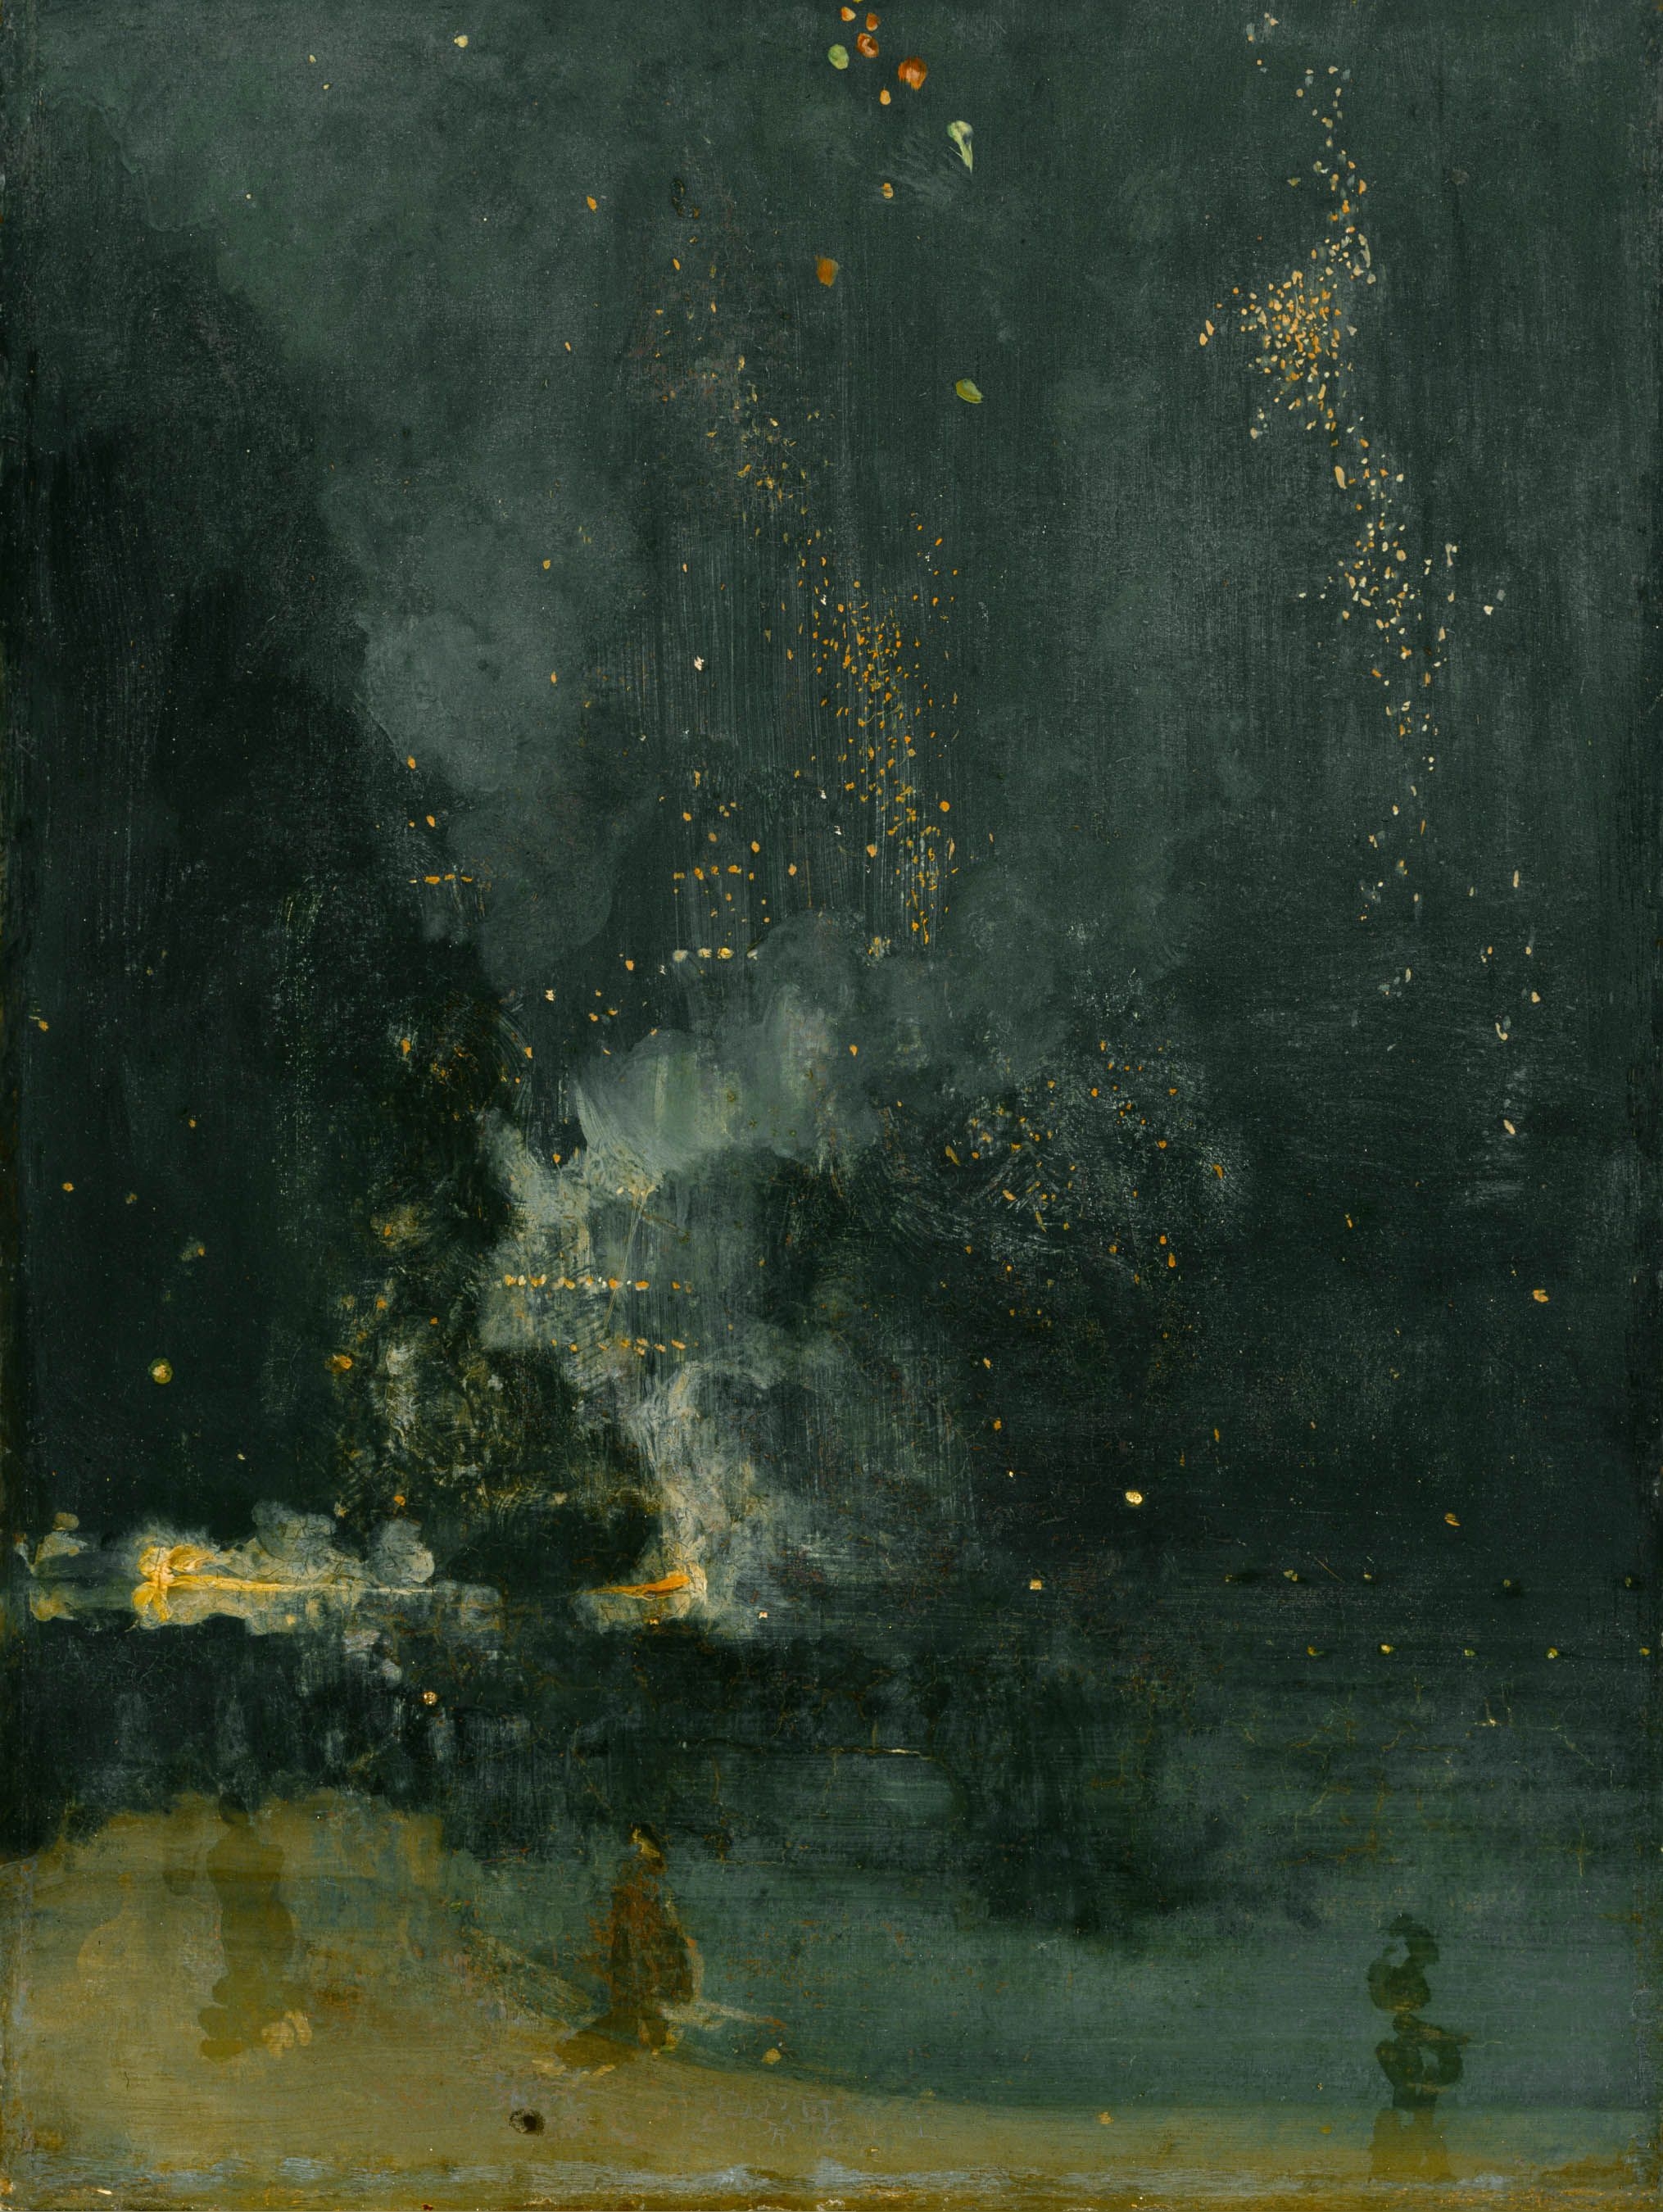 Siyah ve Altından Gece Manzarası, Düşen Roket (orig. "Nocturne in Black and Gold, the Falling Rocket") by James Abbott McNeill Whistler - 1875 - 60,3 × 46,7 cm 